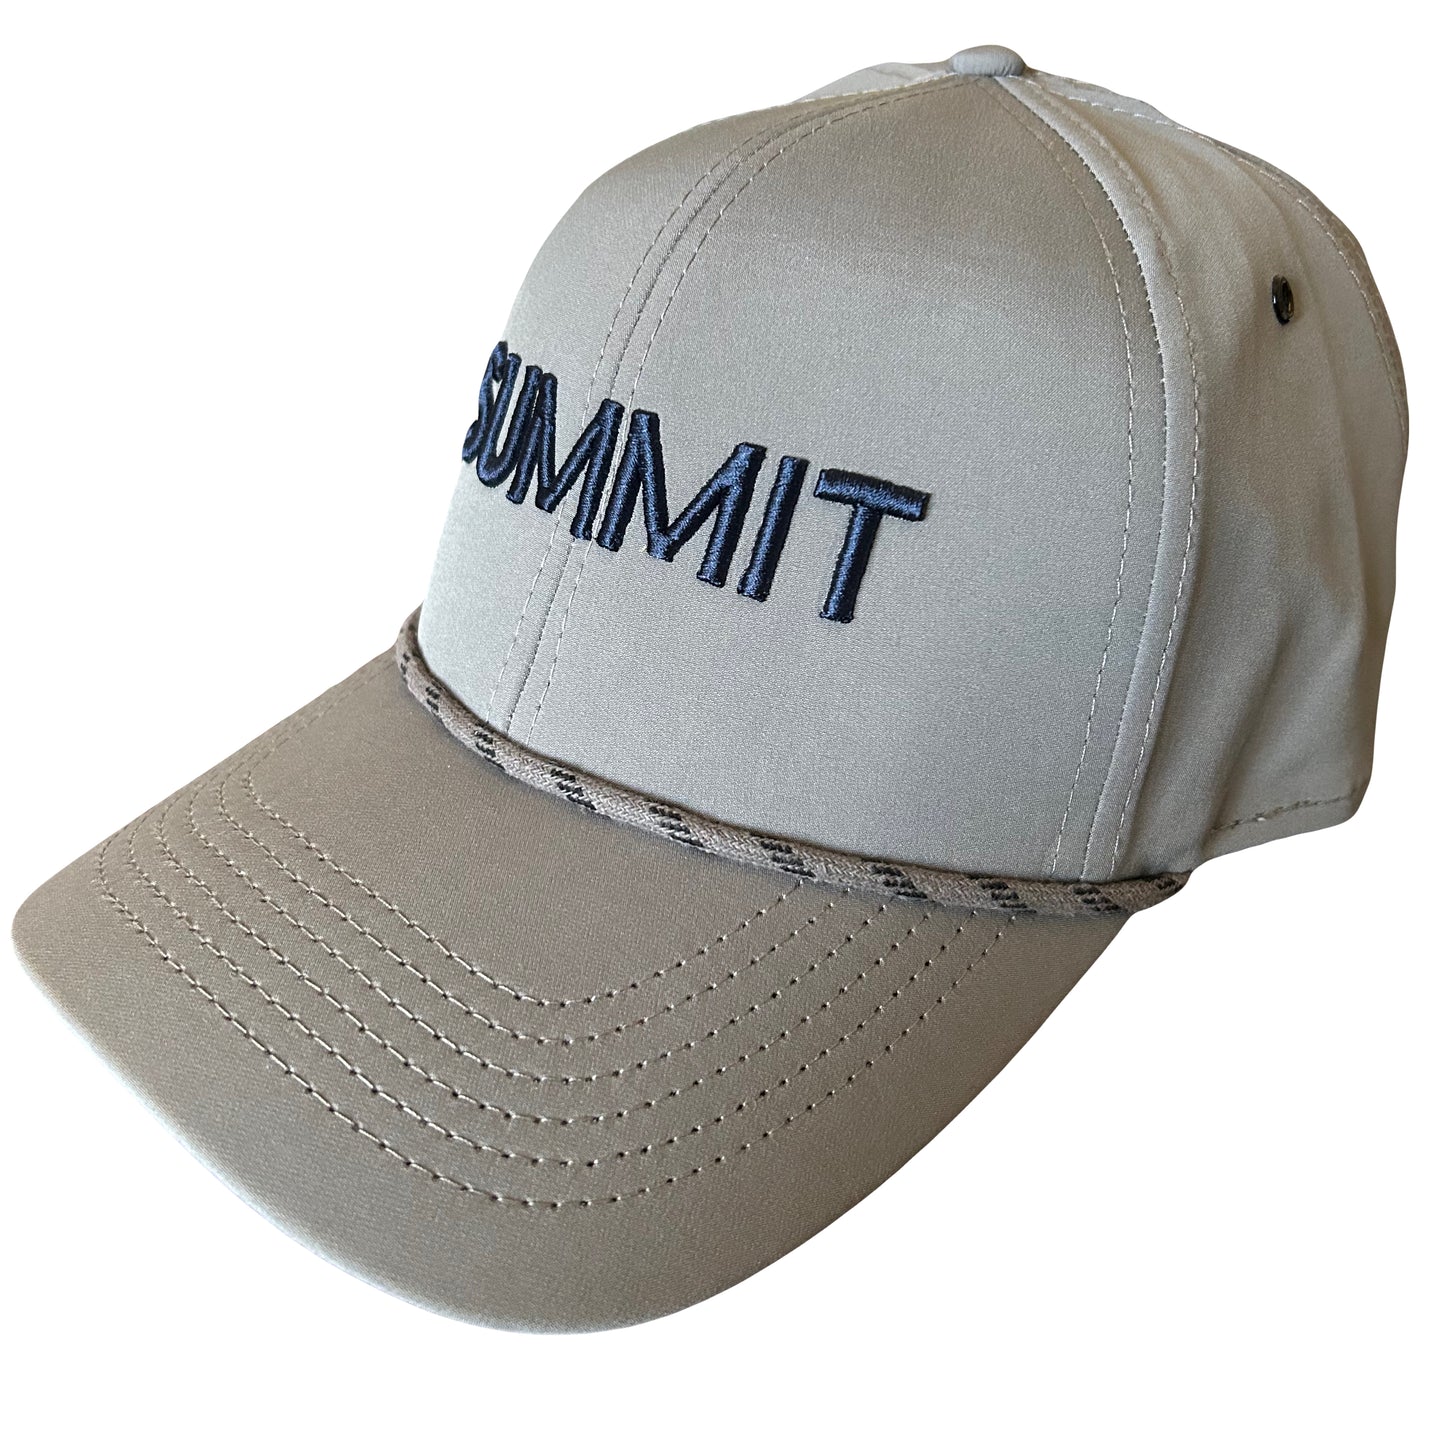 Employee SUMMIT Hat